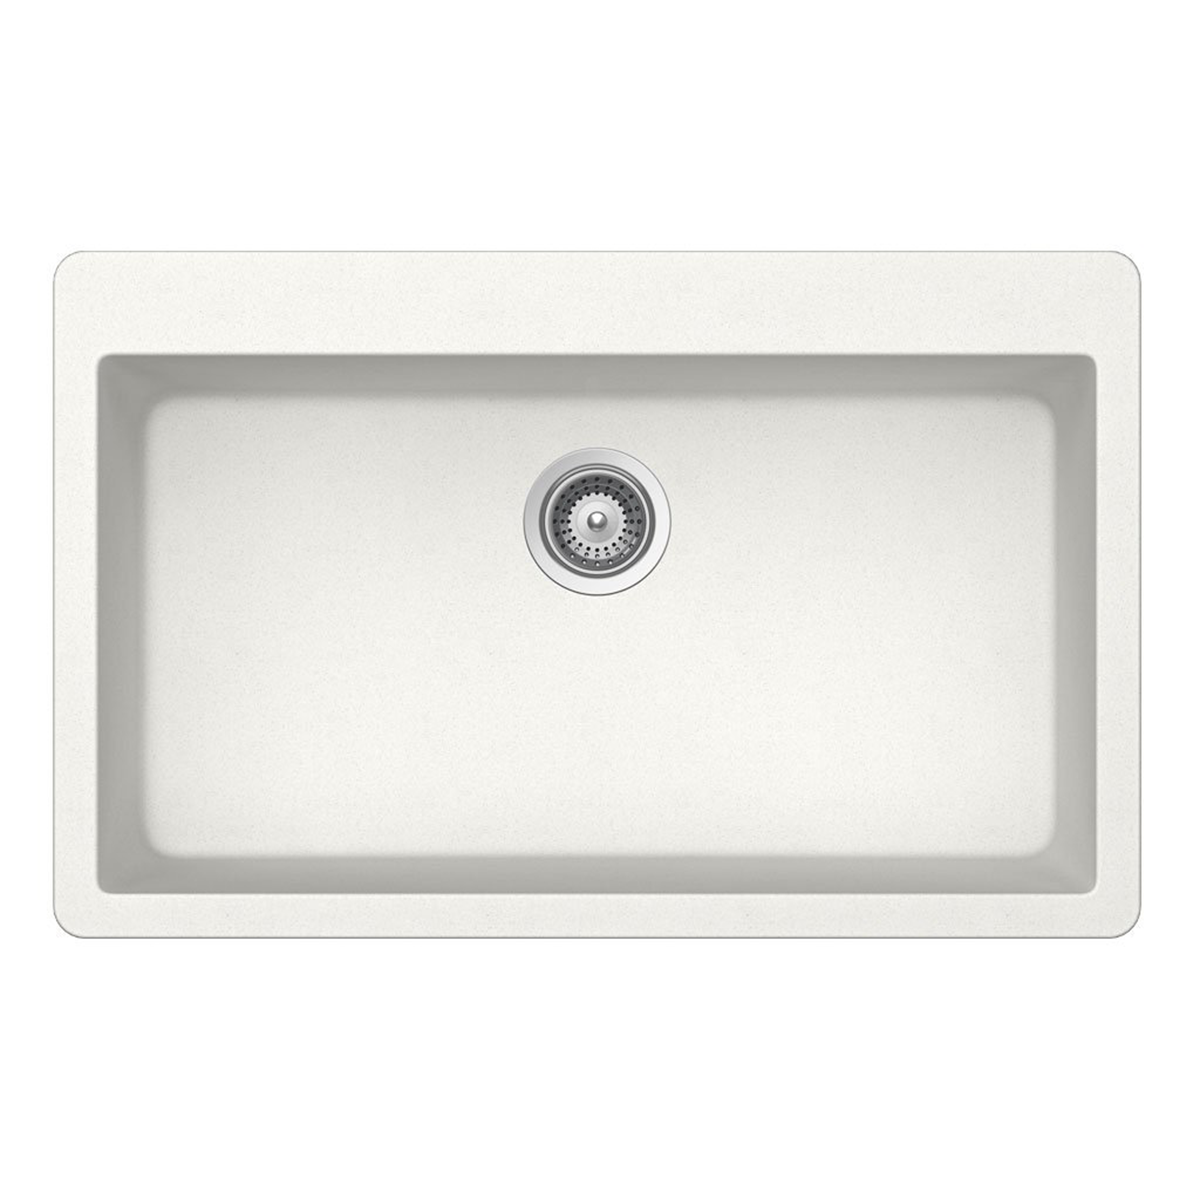 Pelican Int'l Crystallite Series PL-100 33" x 20 7/8" Alpina Granite Composite Topmount/ Undermount Kitchen Sink